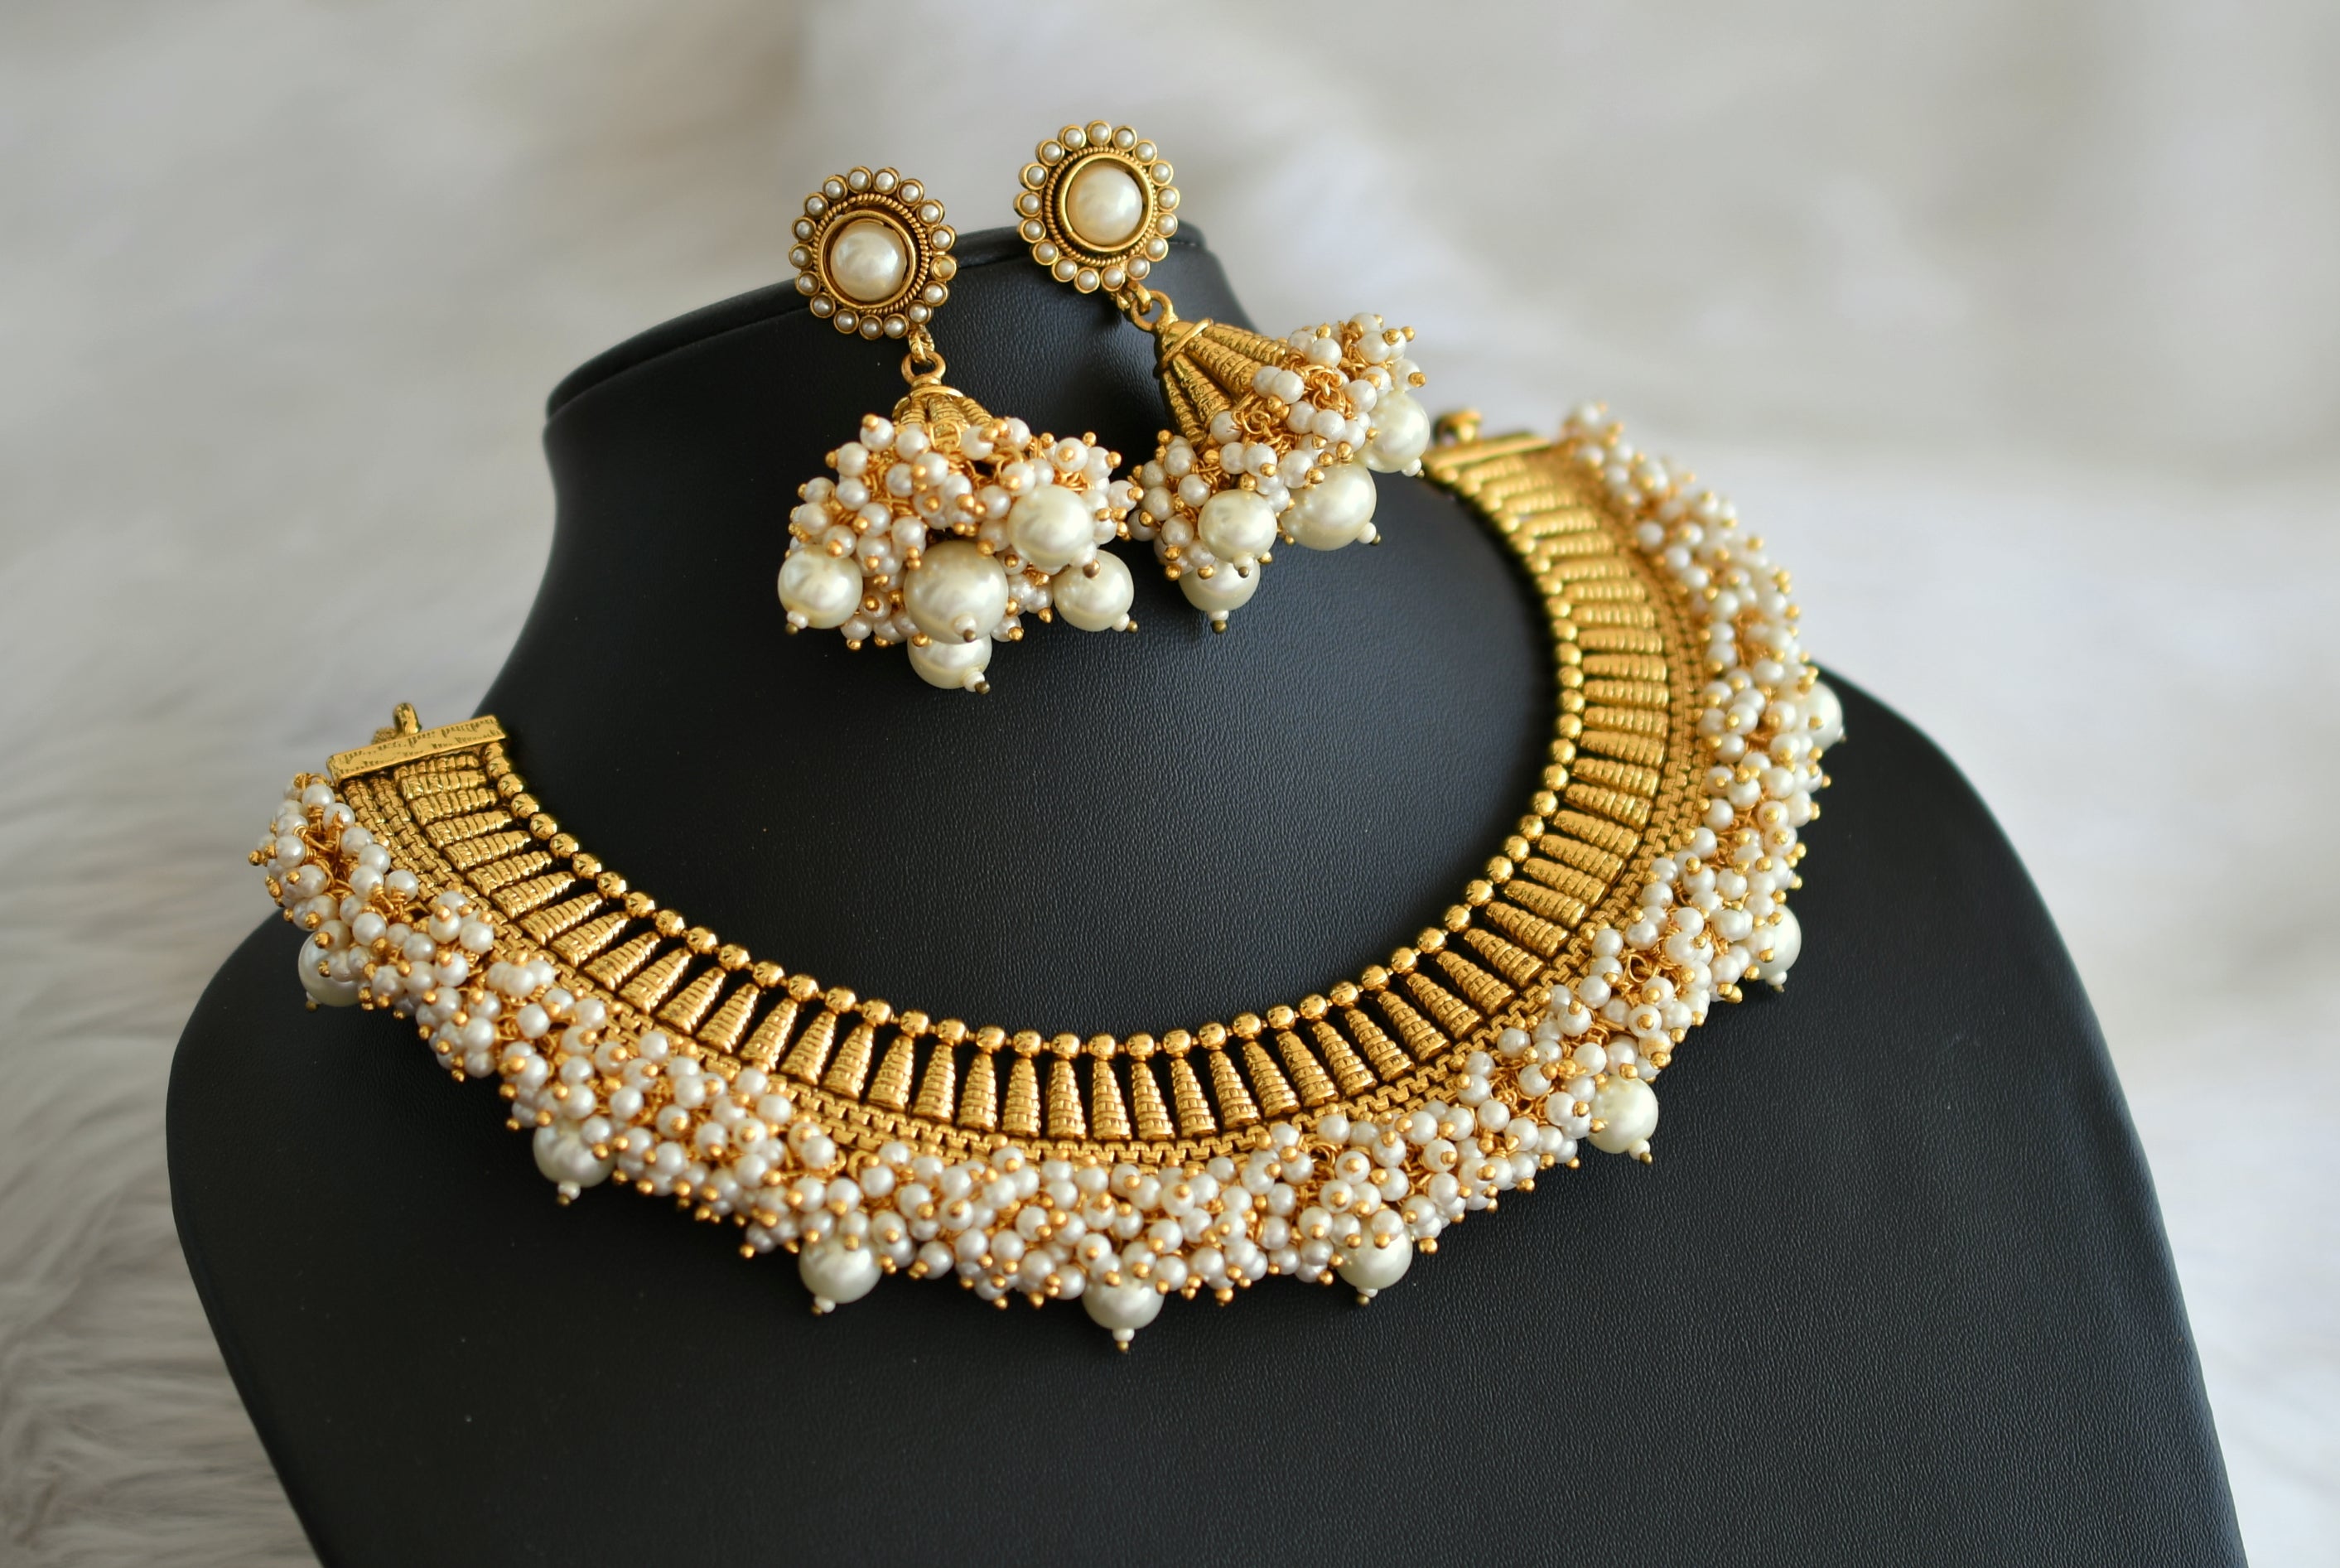 Pearl Cluster Necklace With Earrings & Bajuband, मोतियों का हार - Beeline,  Pune | ID: 2849577643733